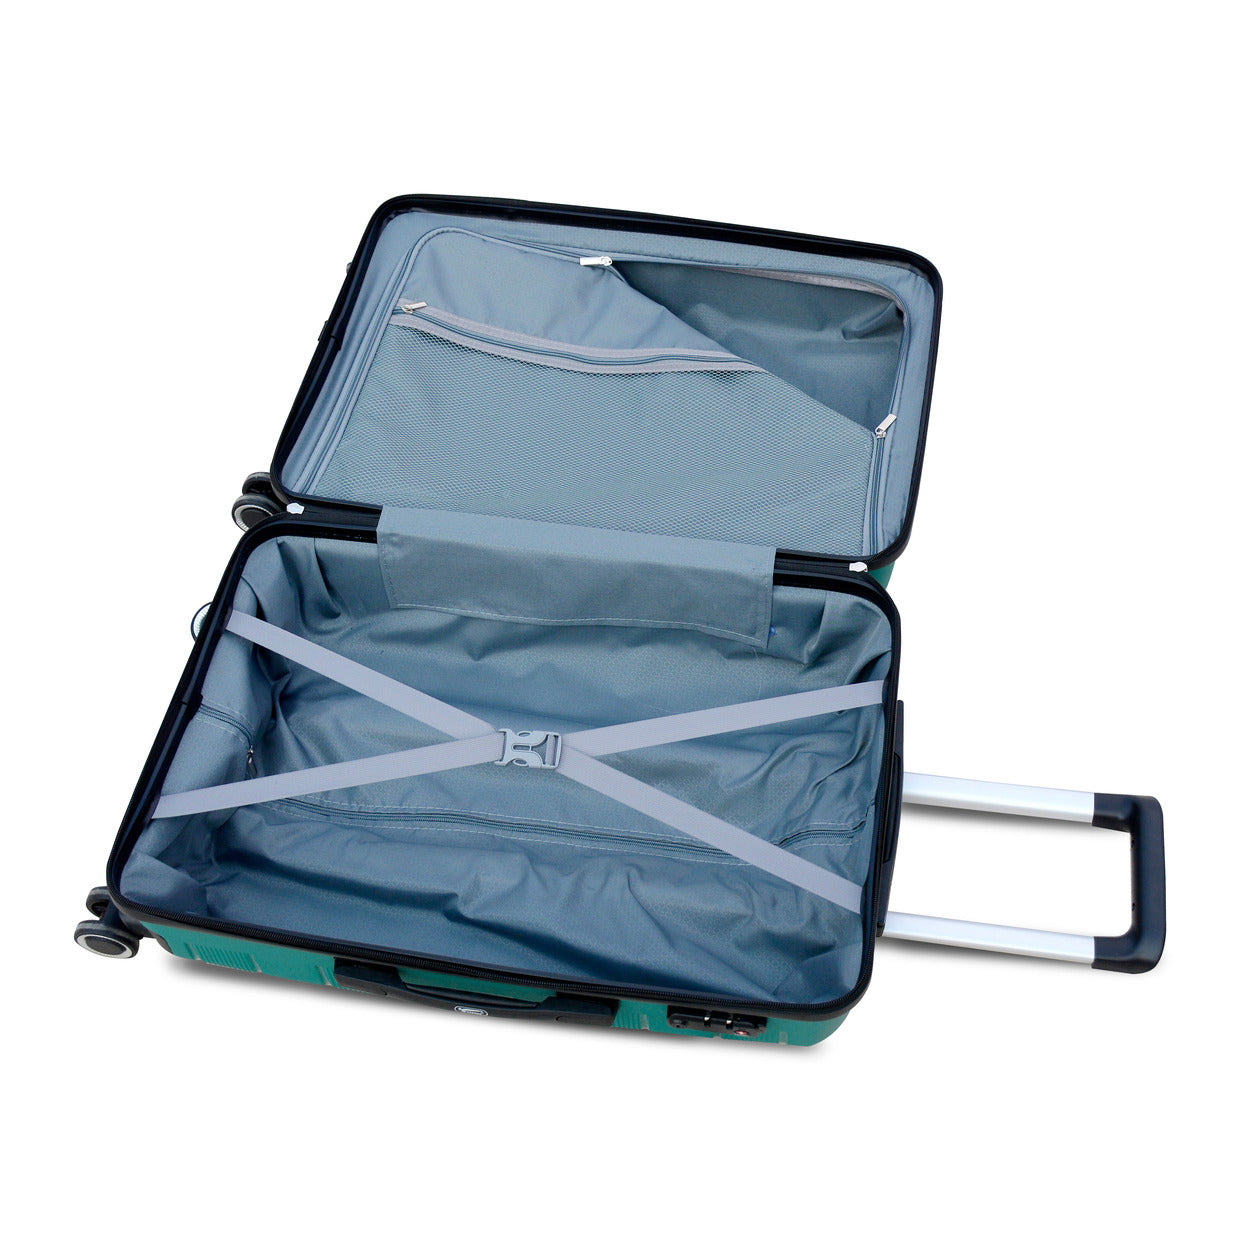 20” Paris Fashion Lightweight PP Luggage Light Green Colour | Hard case Spinner Wheel Trolley Bag zaappy.com